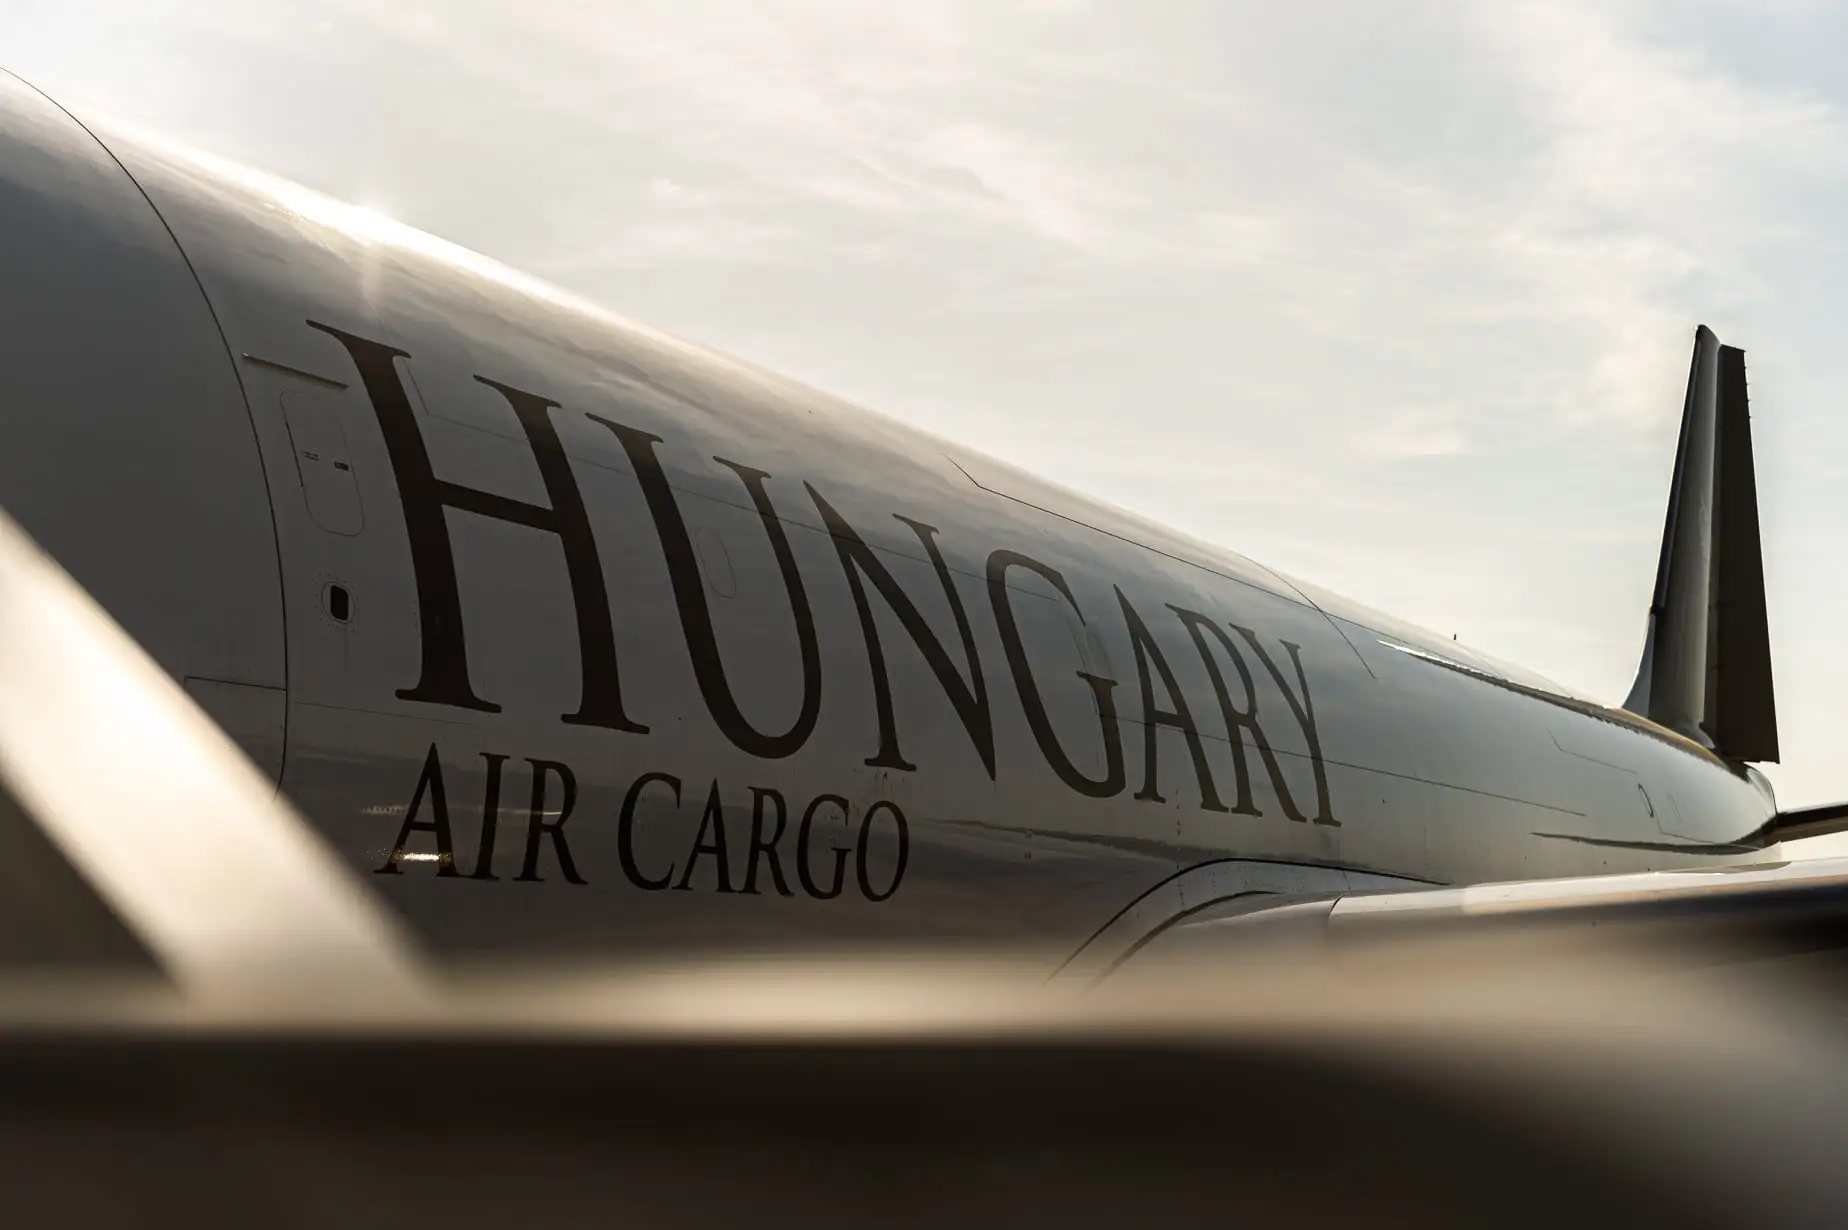 Hungary cargo plane Asia